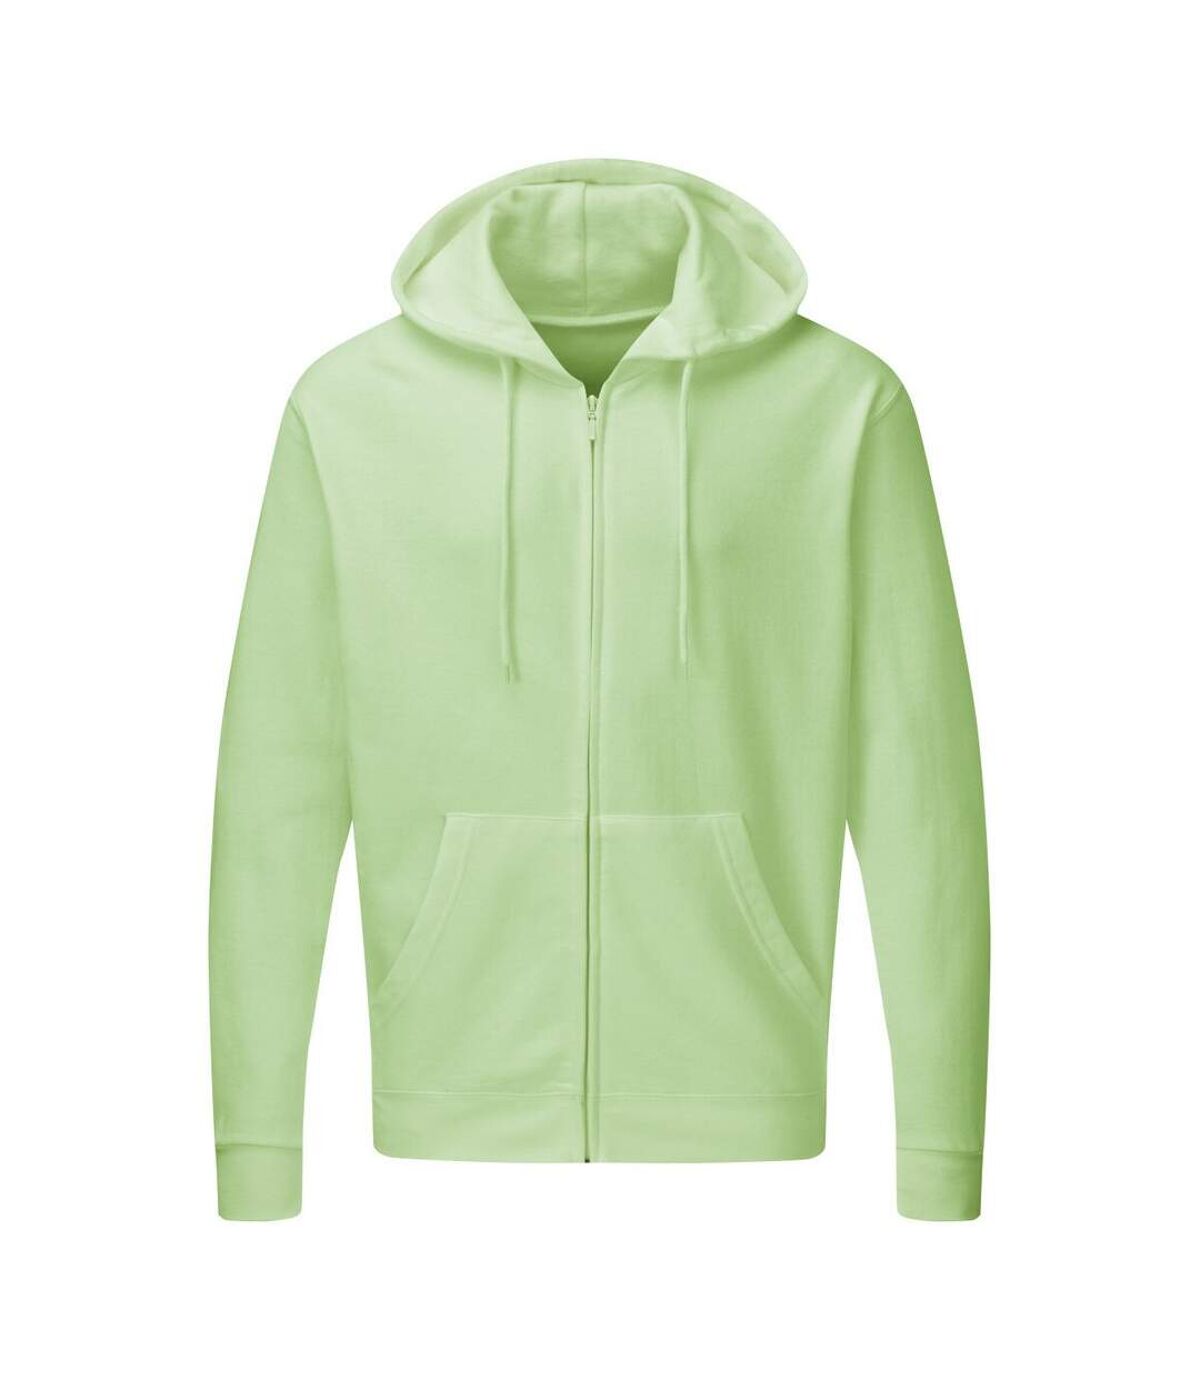 SG Mens Plain Full Zip Hooded Sweatshirt (Neo Mint) - UTBC1075